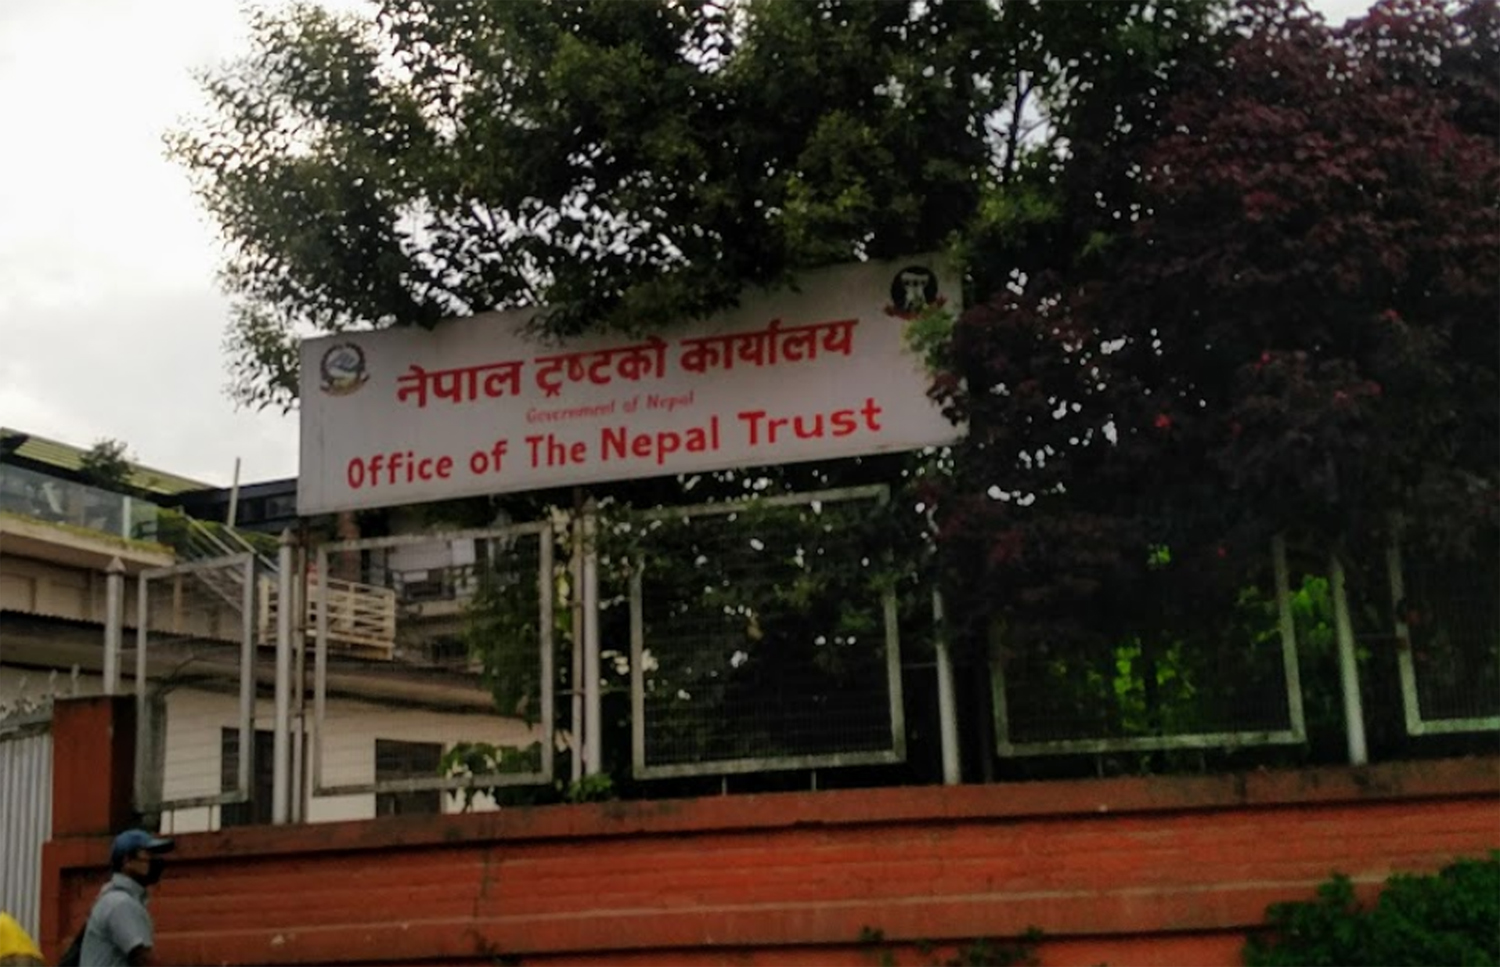 Nepal Trust leasing 2 ropanis of land in Kamaladi for 30 years